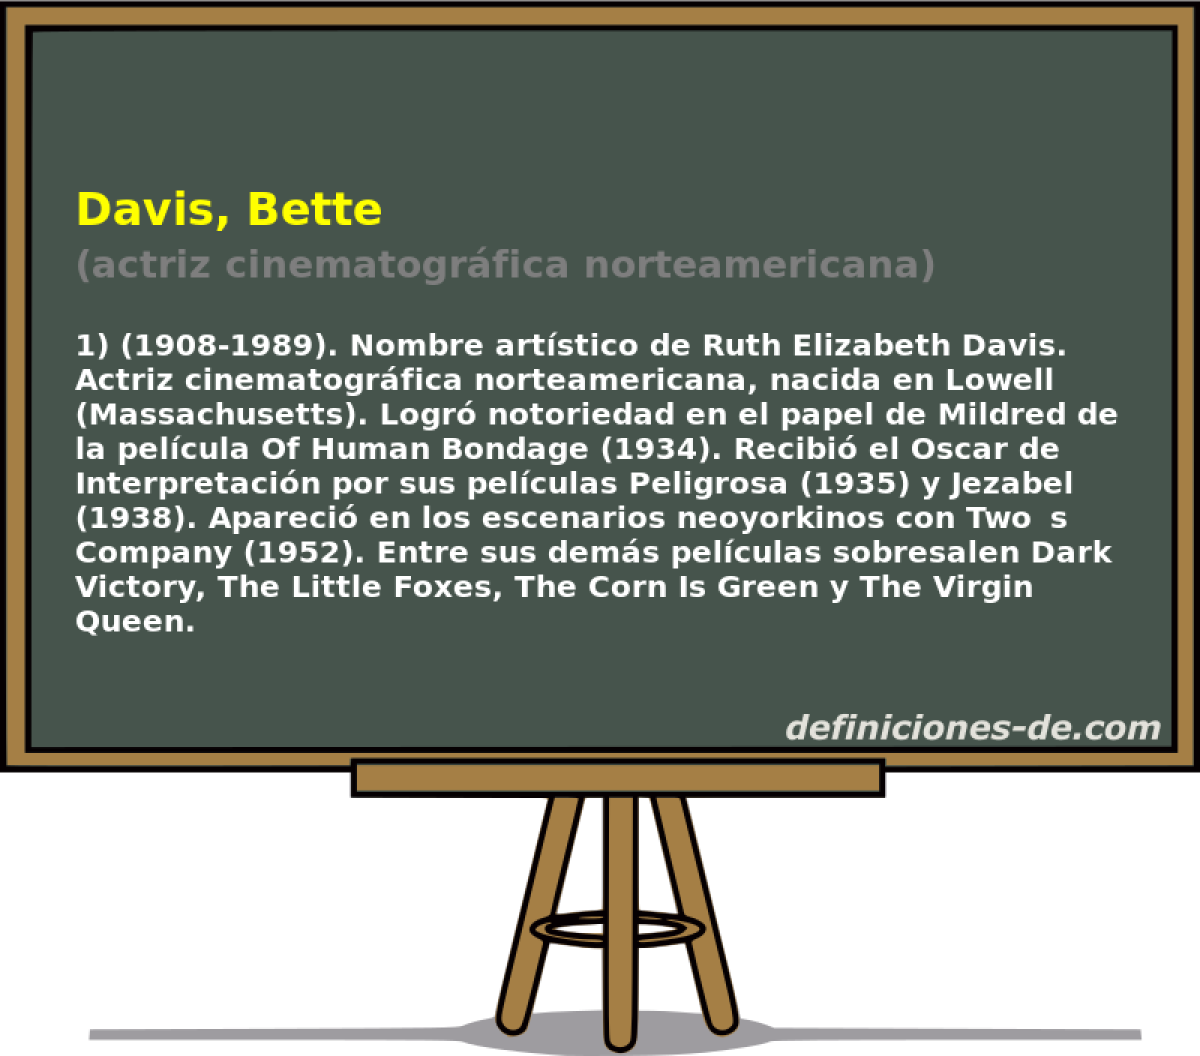 Davis, Bette (actriz cinematogrfica norteamericana)